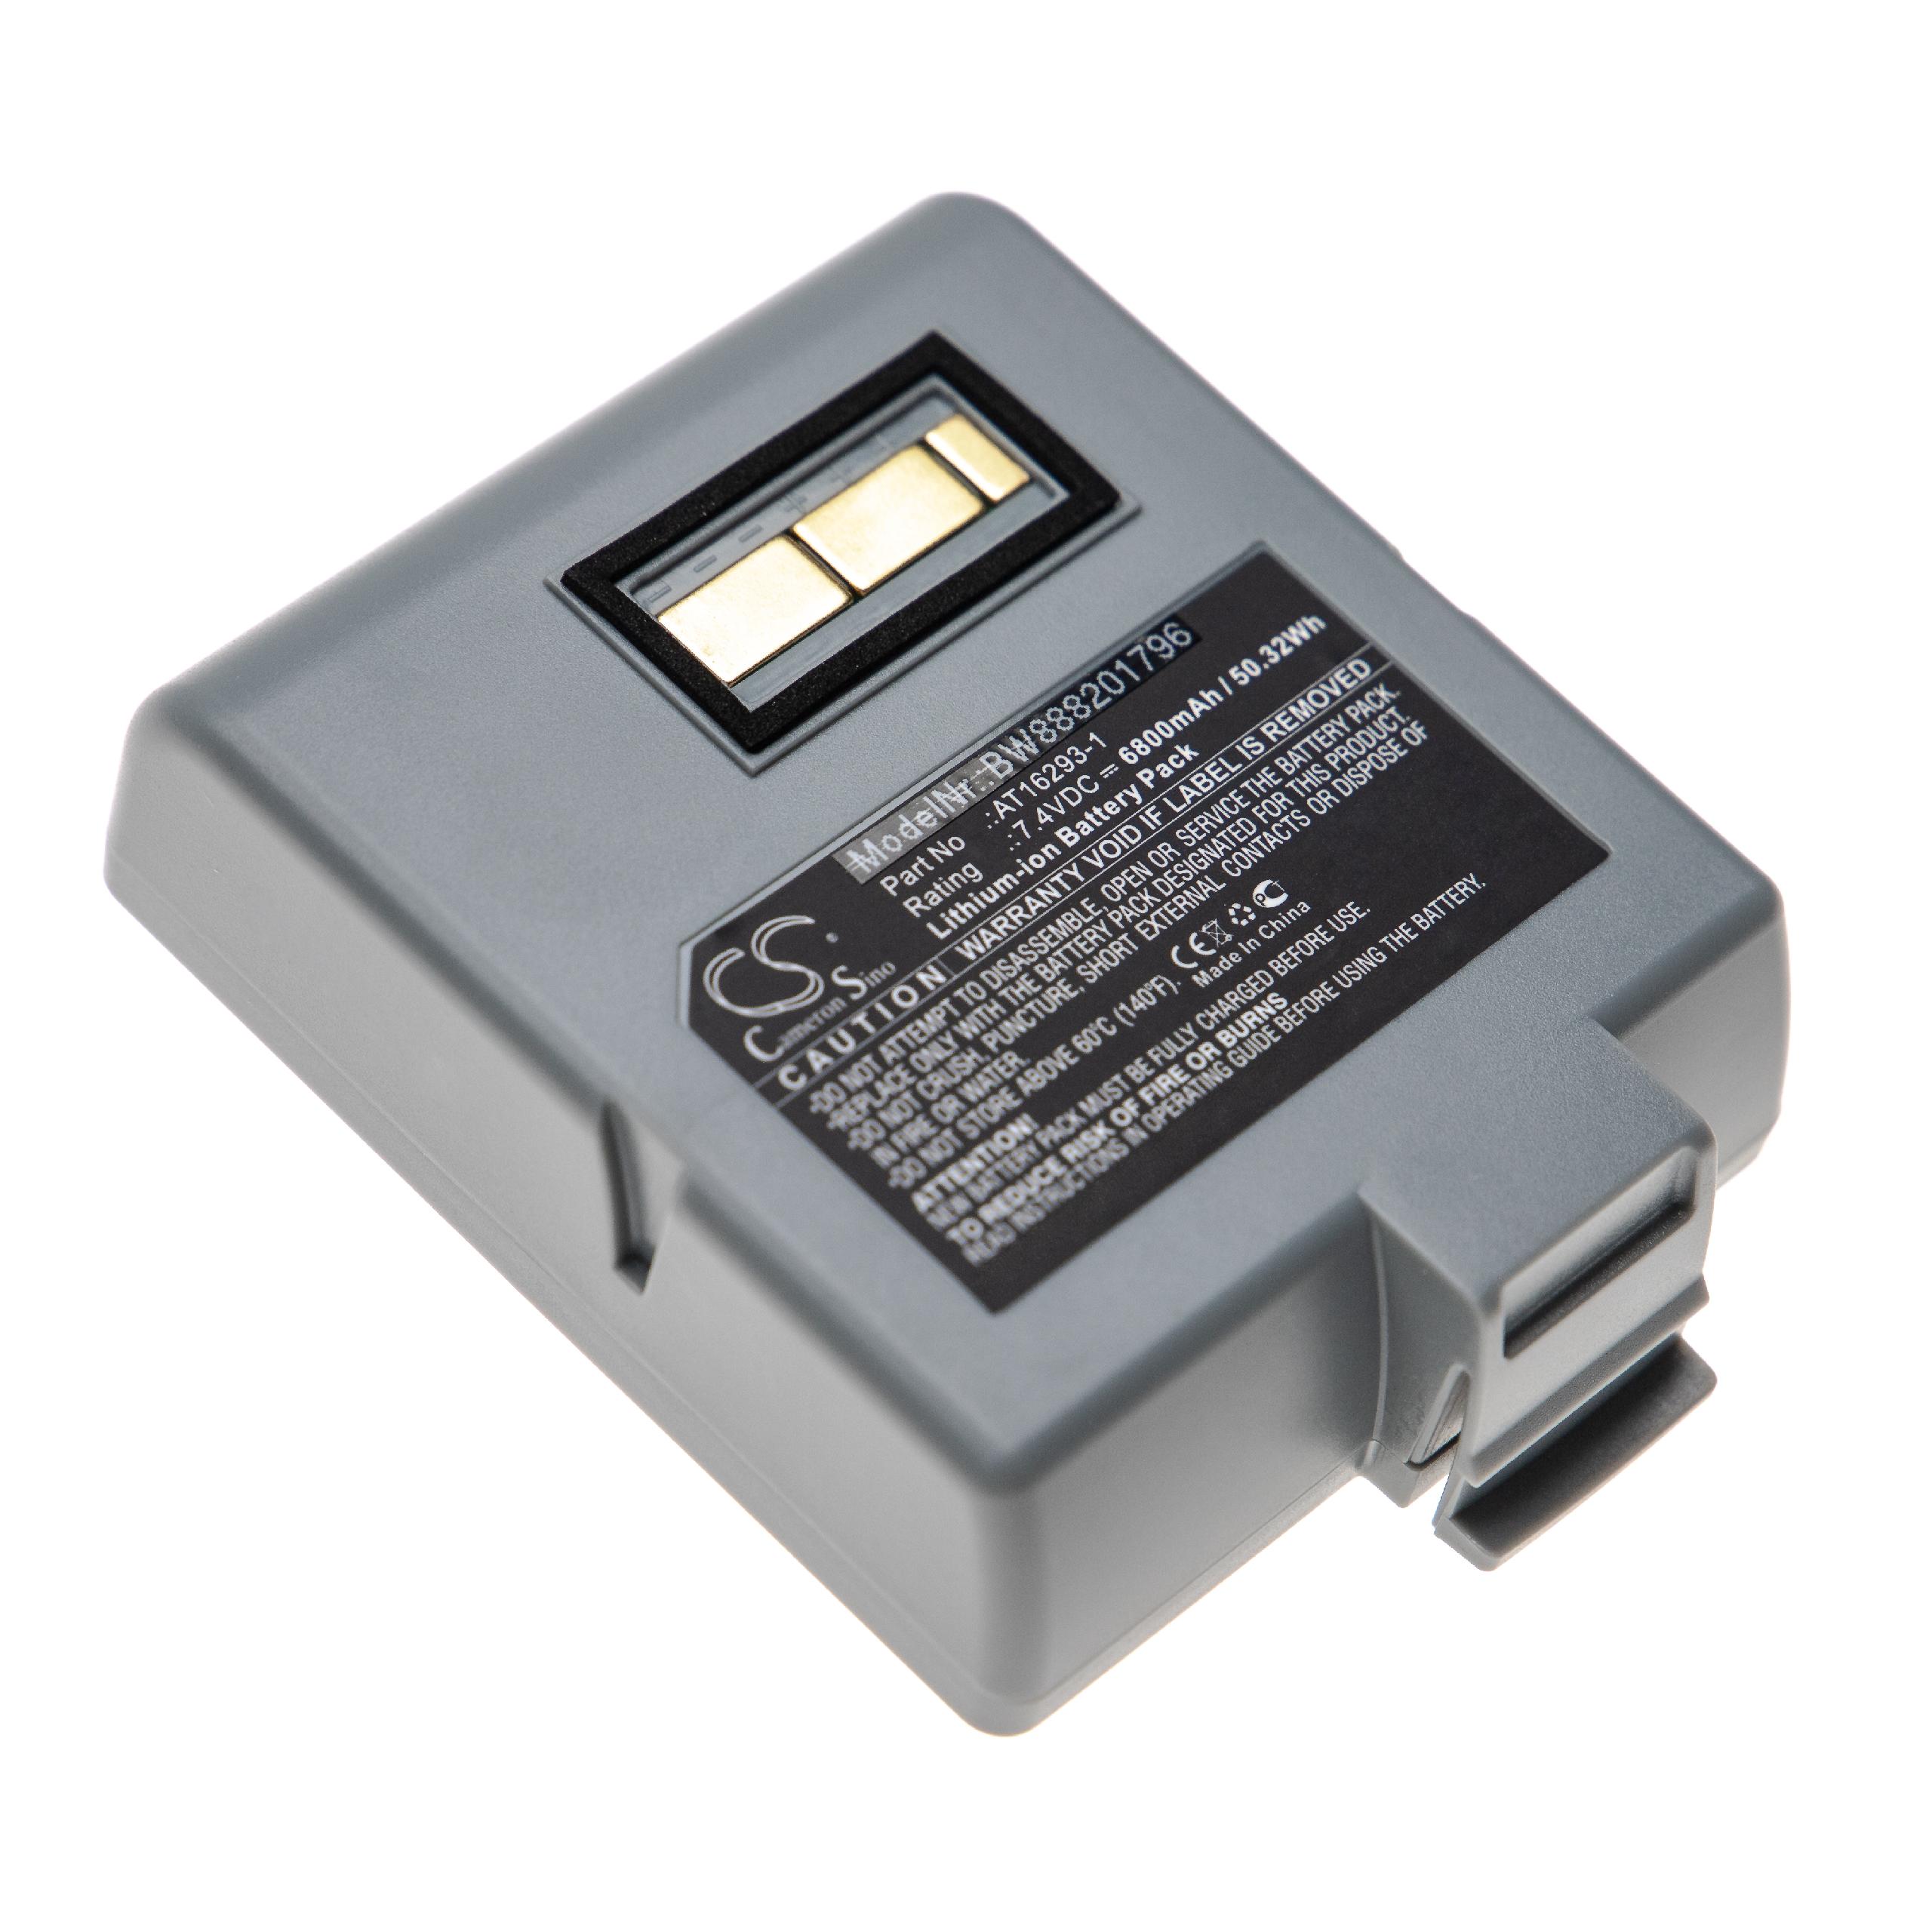 Printer Battery Replacement for Zebra AT16293-1 - 6800mAh 7.4V Li-Ion